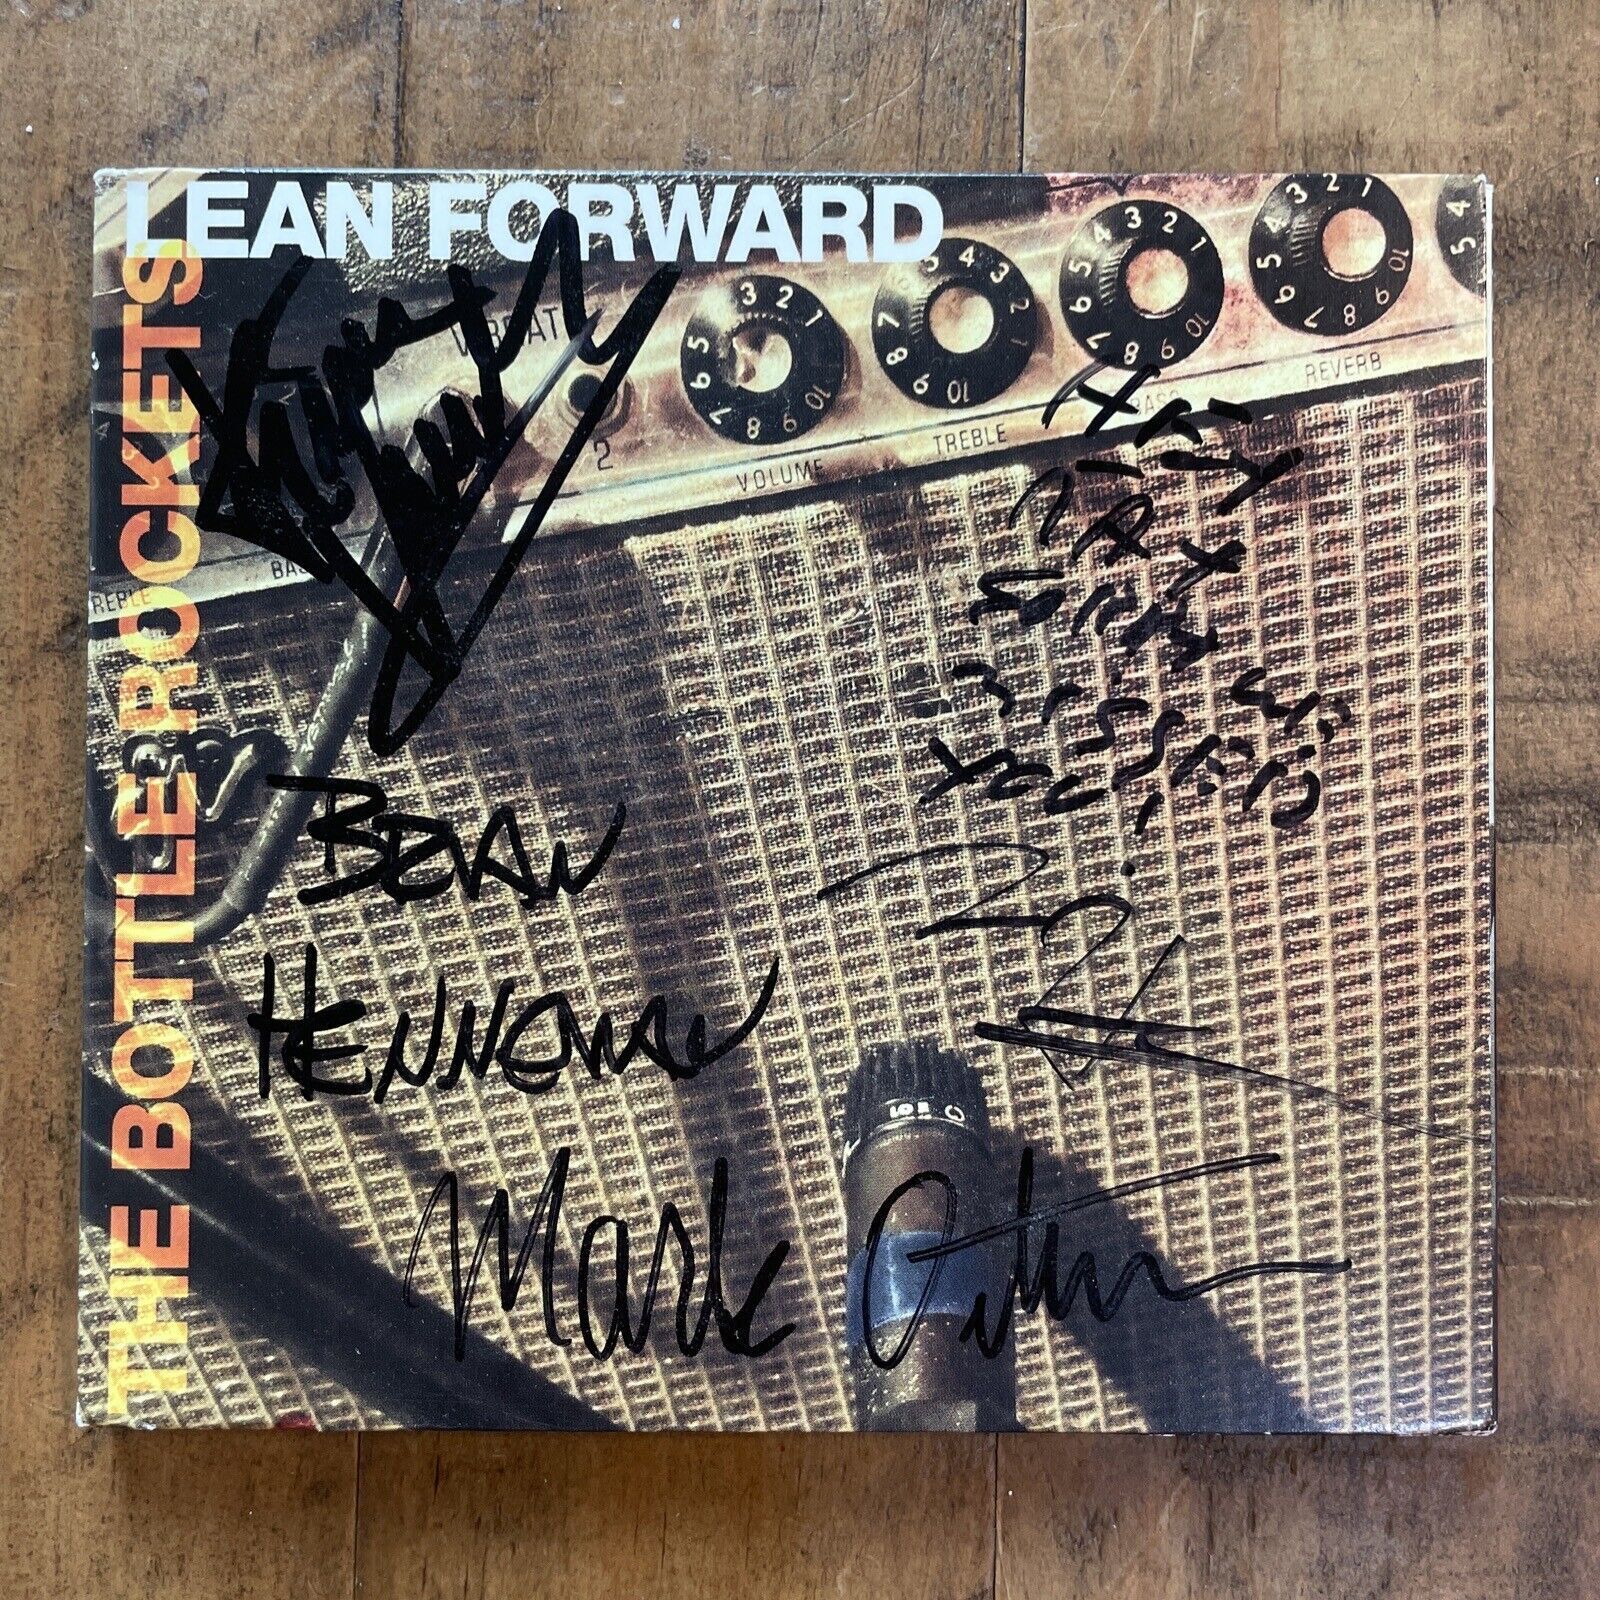 Bottle Rockets : Lean Forward CD (2009) Signed Read Description